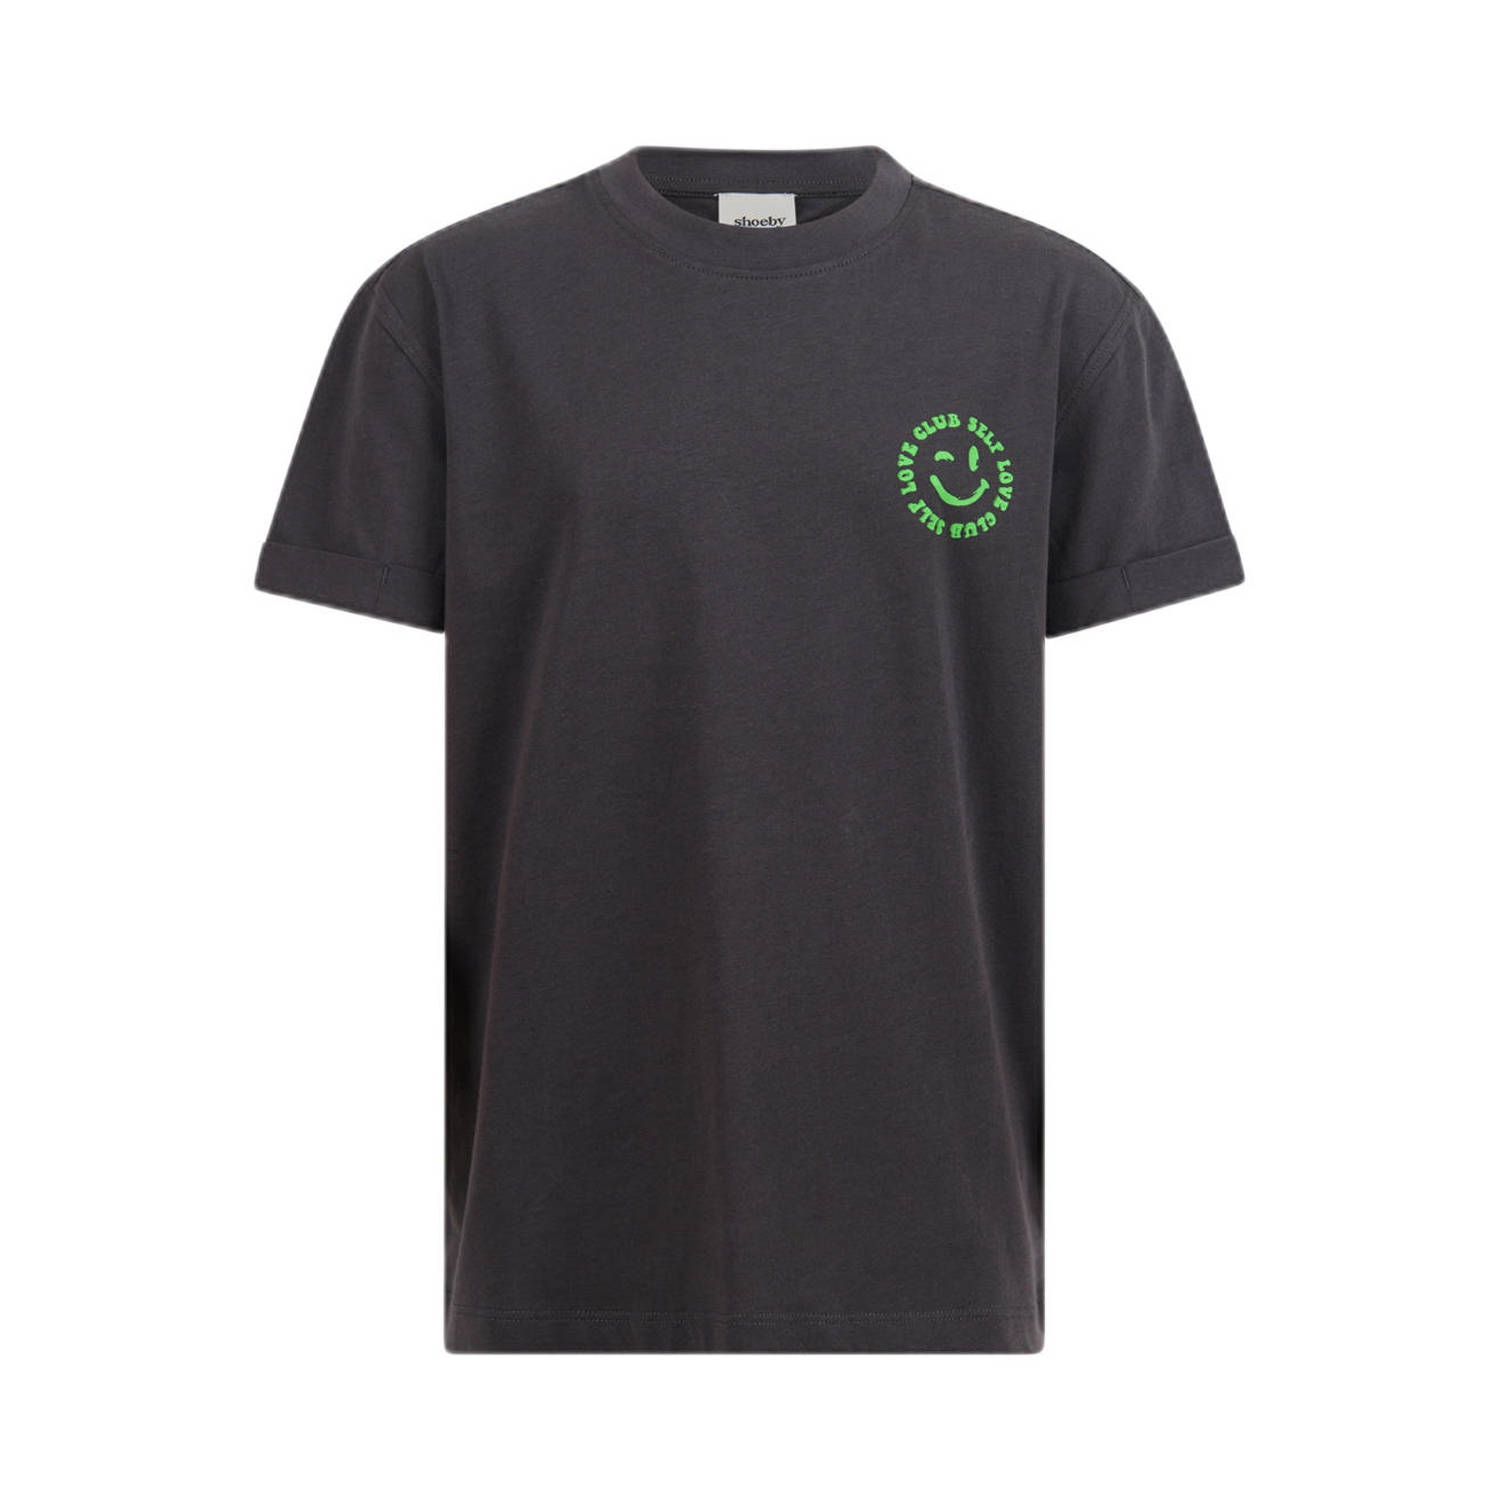 Shoeby T-shirt met backprint donkergrijs groen